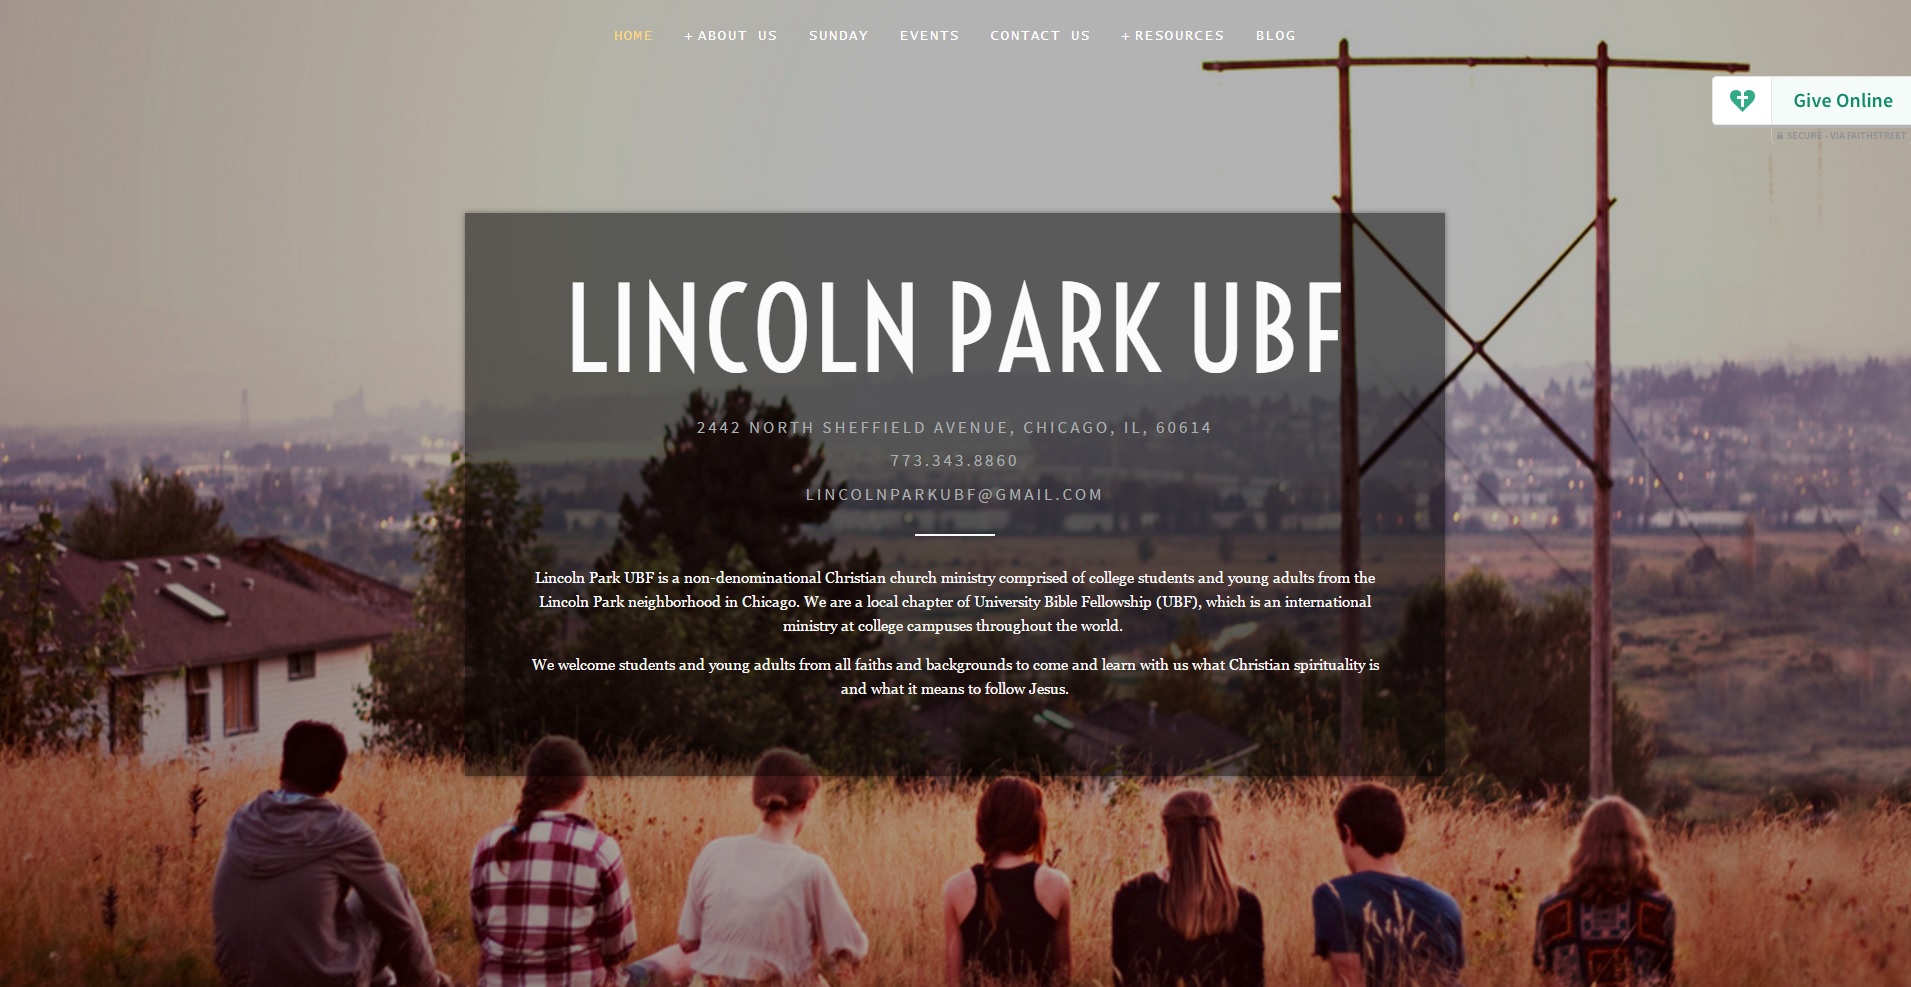 Lincoln Park UBF